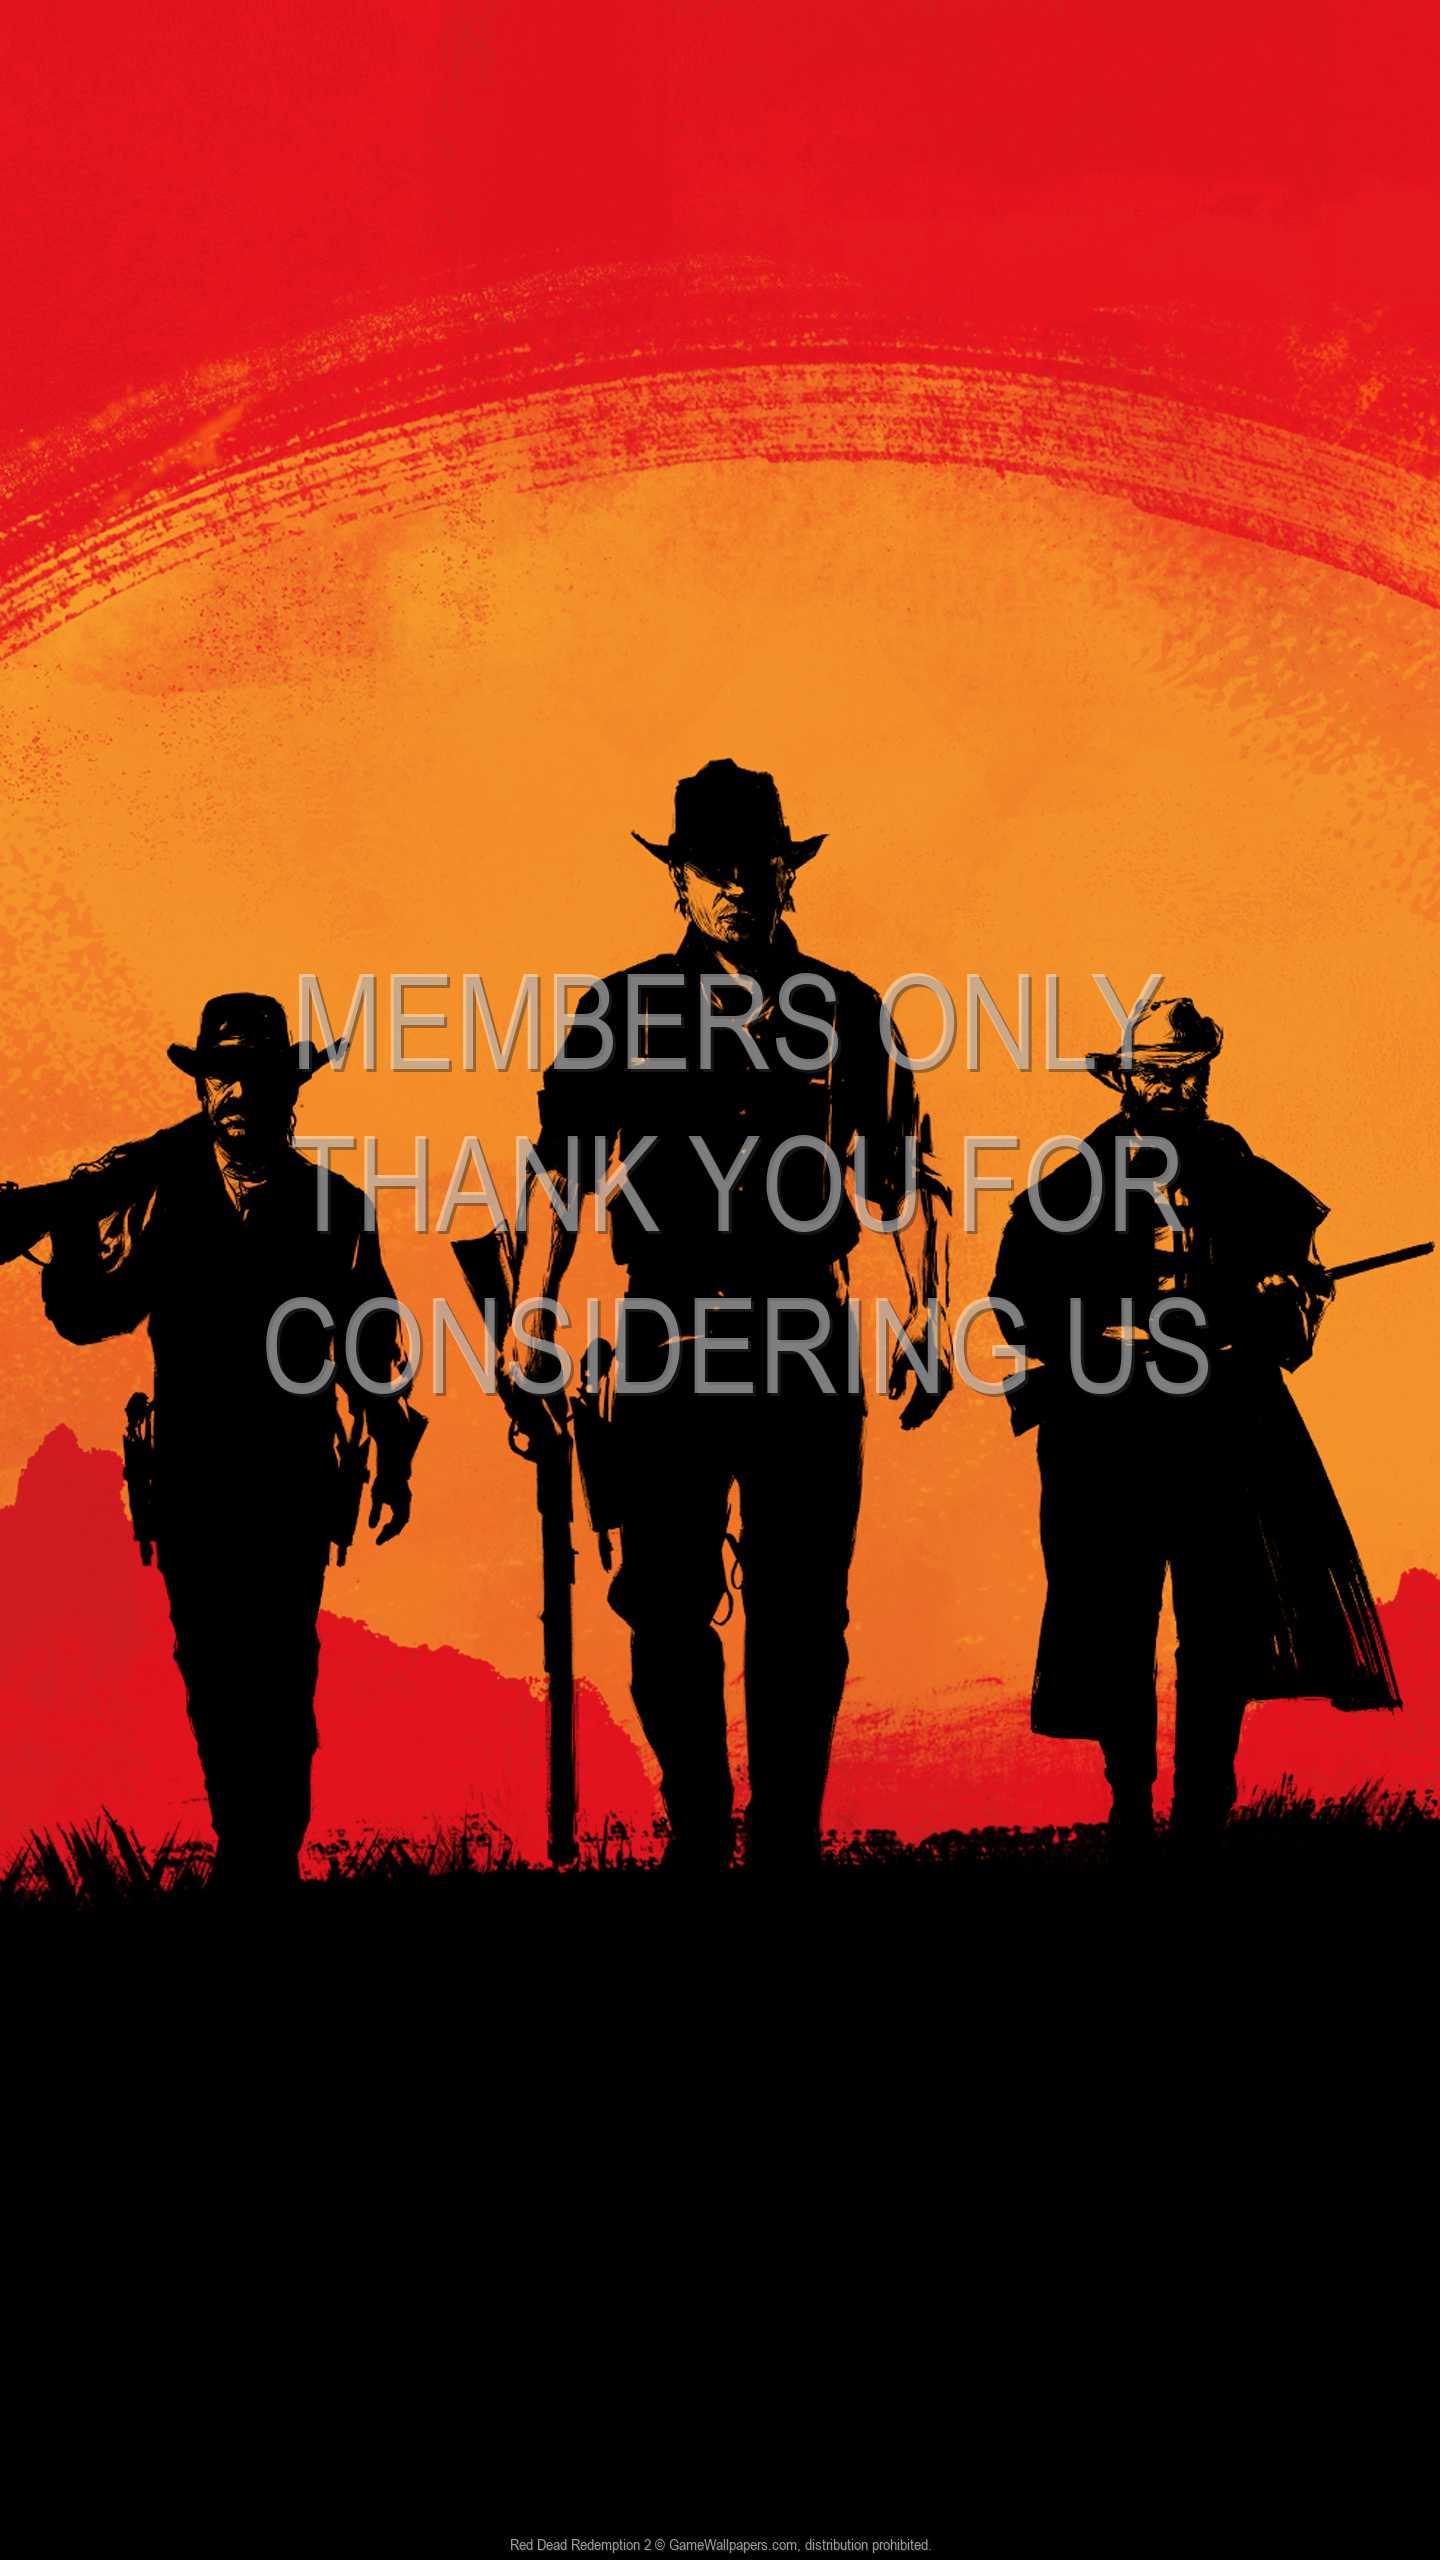 Red Dead Redemption 2 1440p%20Vertical Mobile wallpaper or background 01